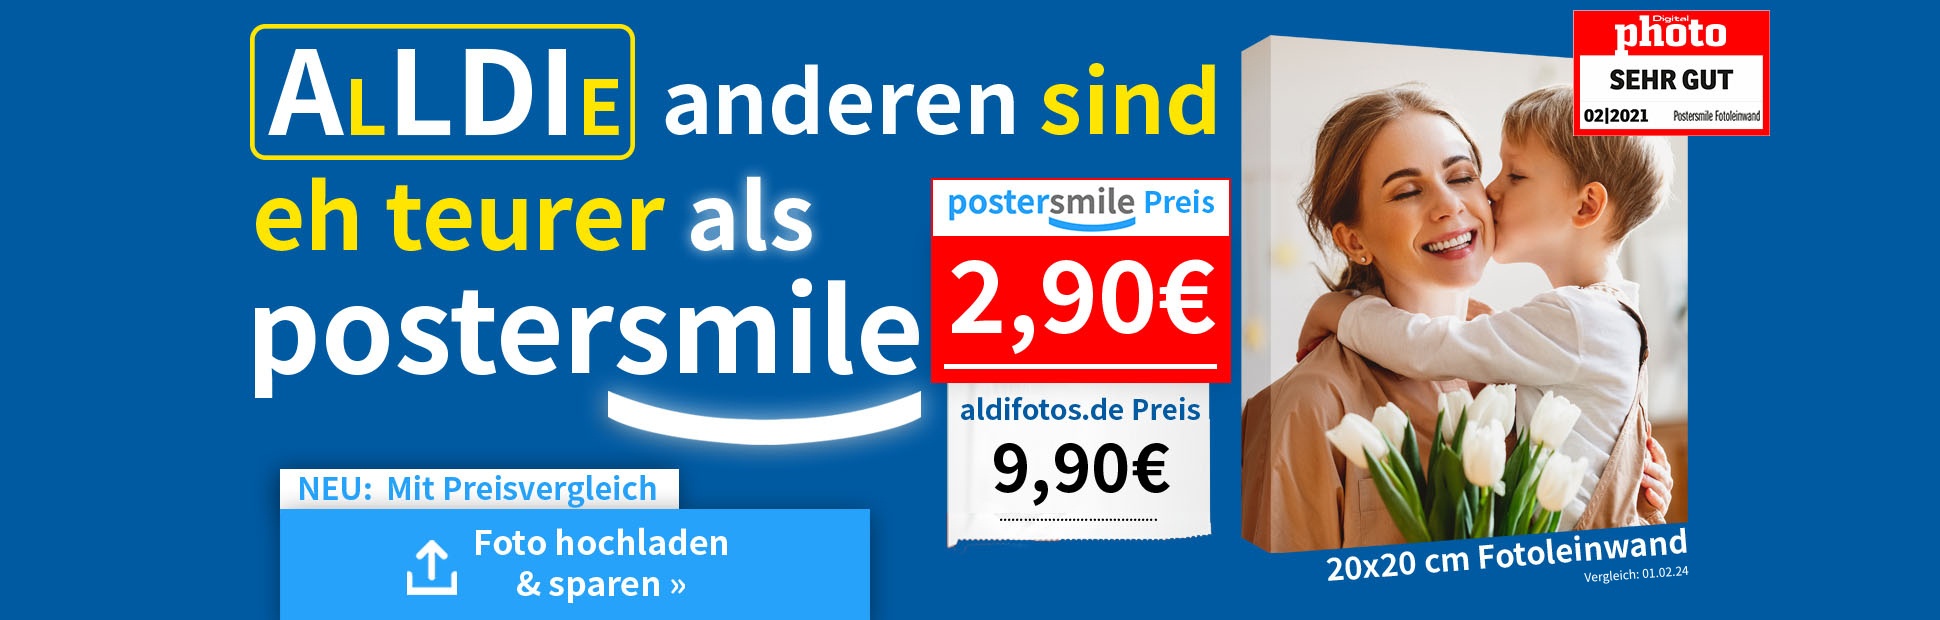 Fotoleinwand günstig - Foto auf Leinwand Preisvergleich postersmile.de vs. Aldifotos.de